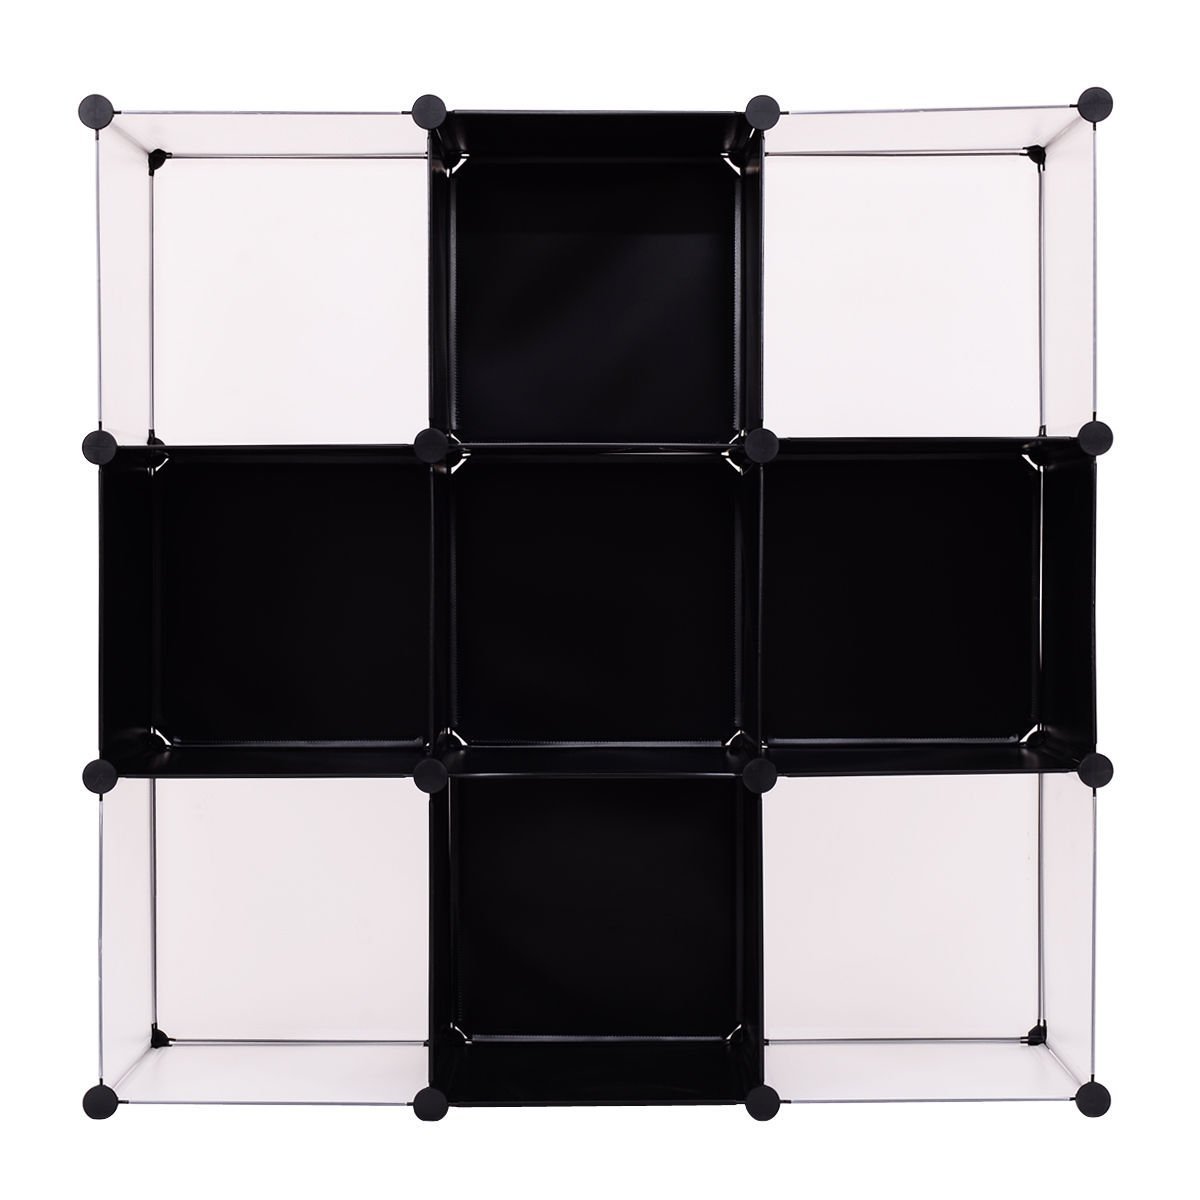 Buy now tangkula cube storage organizer 9 cube bookshelf diy plastic closet cabinet modular bookcase storage shelving for bedroom living room office 43 5l x 14 6 w x 43 5h